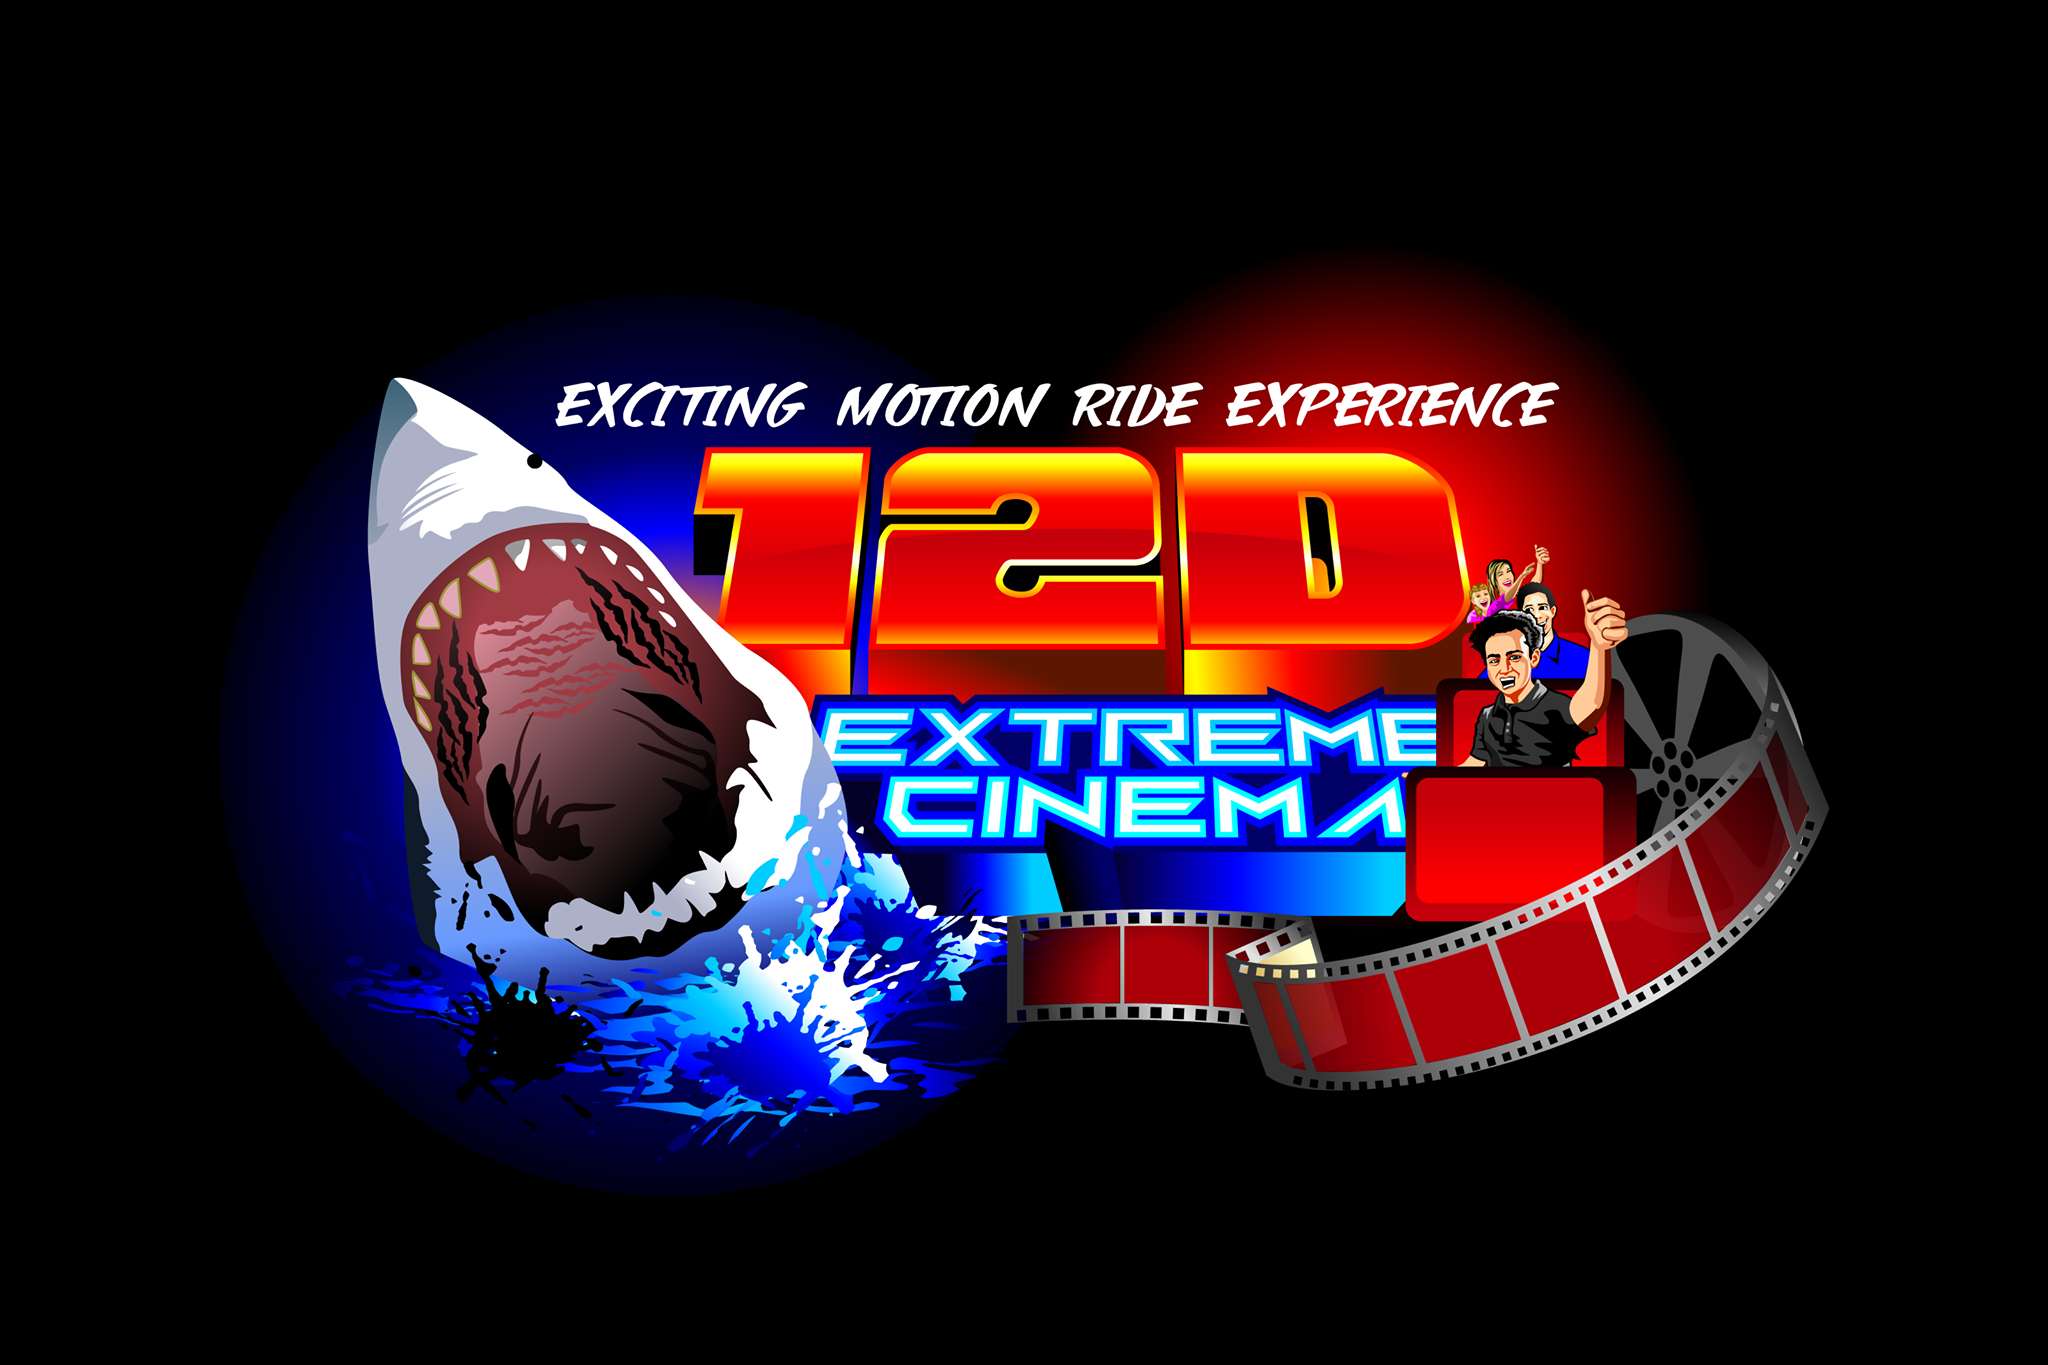 New Member – 12D Extreme Cinema Busselton